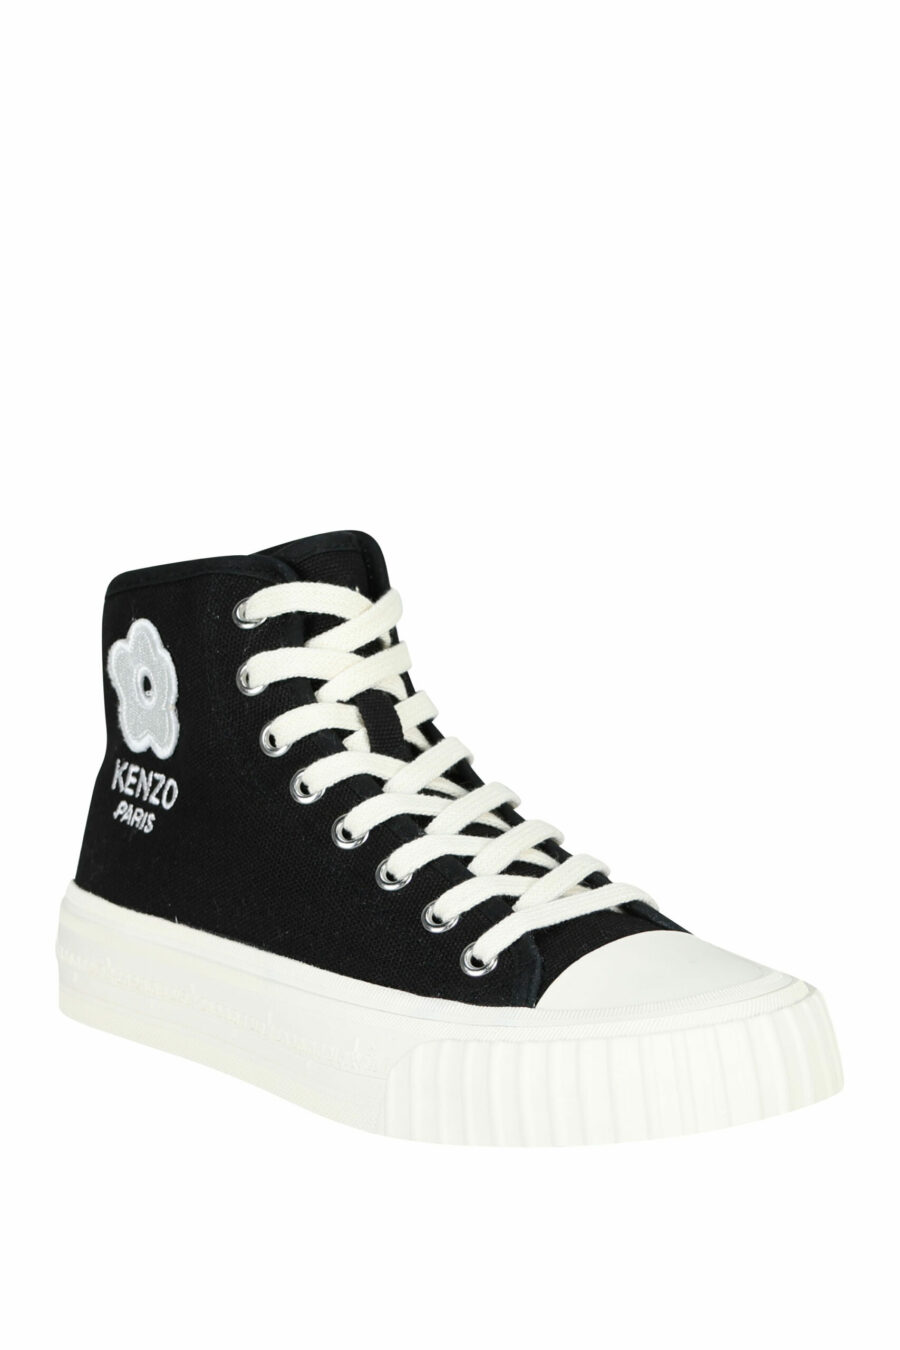 Zapatillas negras altas "kenzo foxy" con logo "boke flower" blanco - 3612230639515 1 scaled